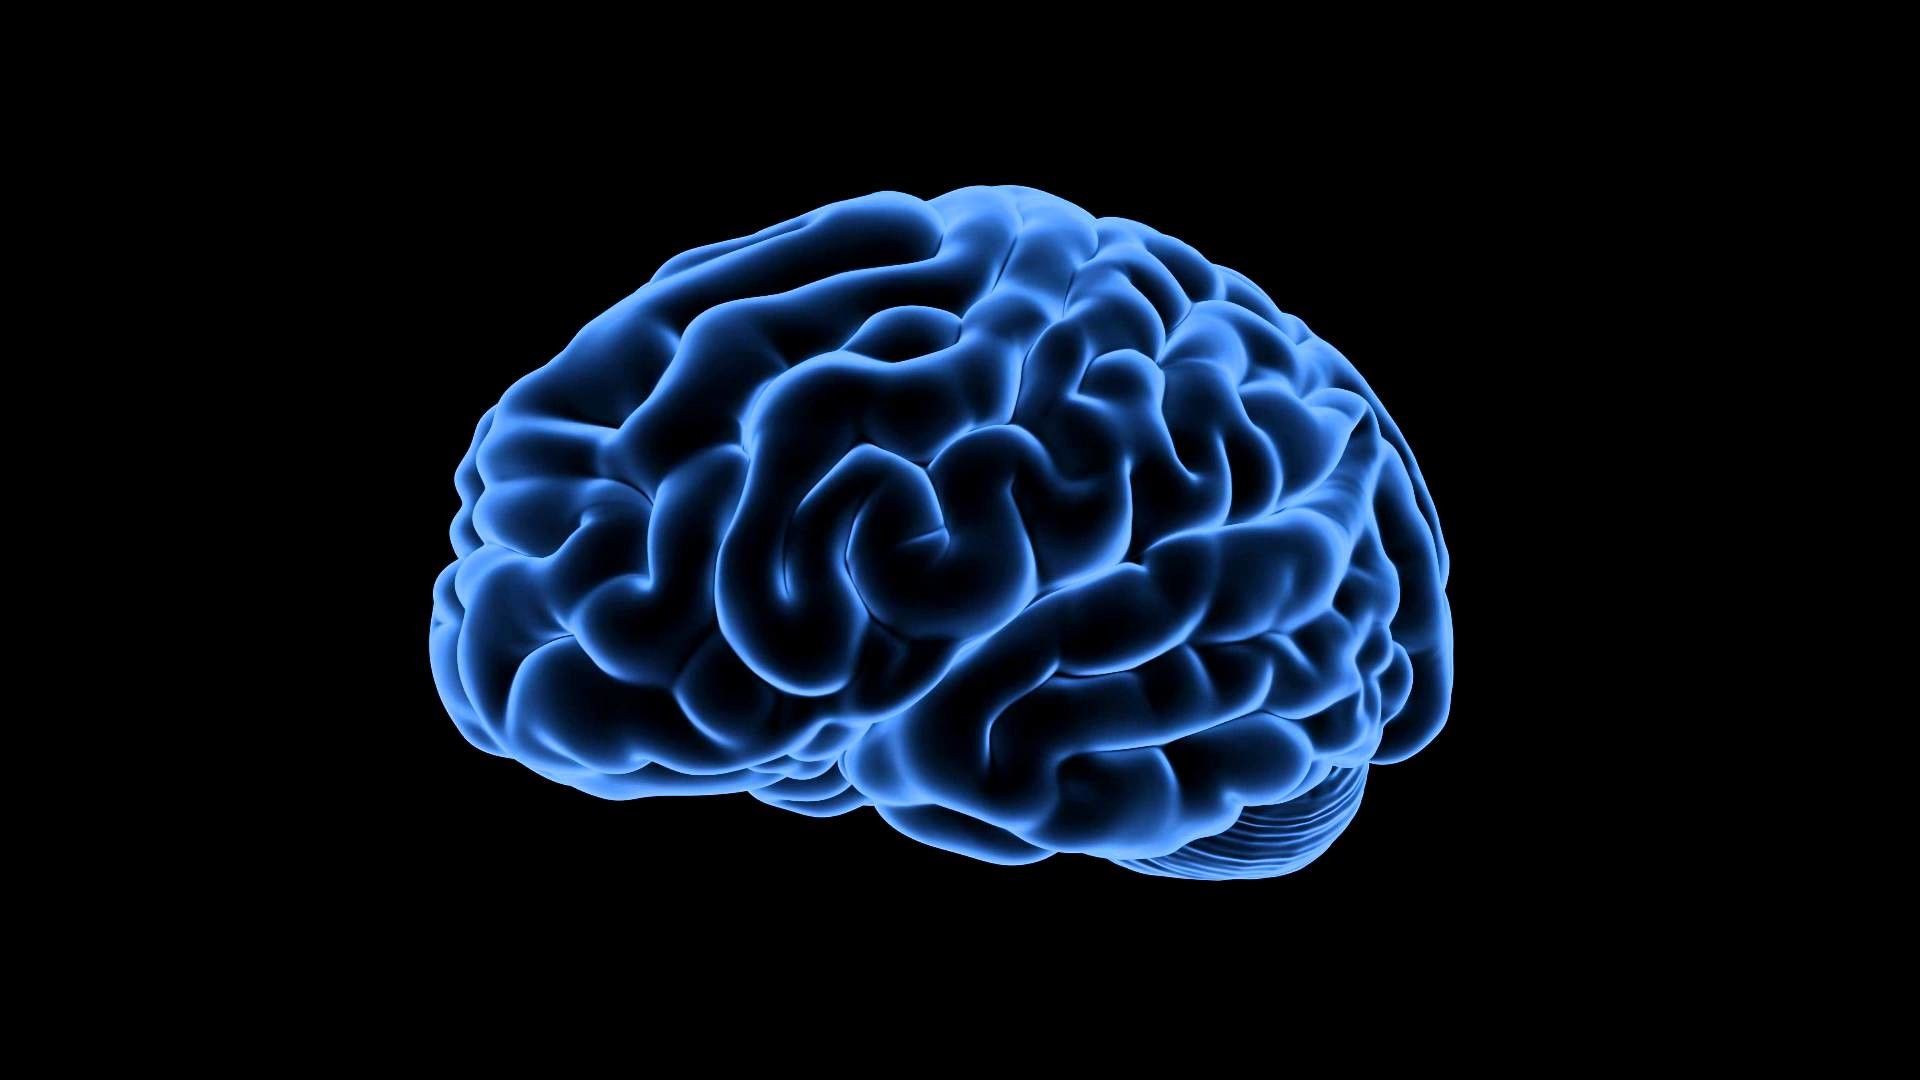 Human Brain Wallpaper Free Human Brain Background